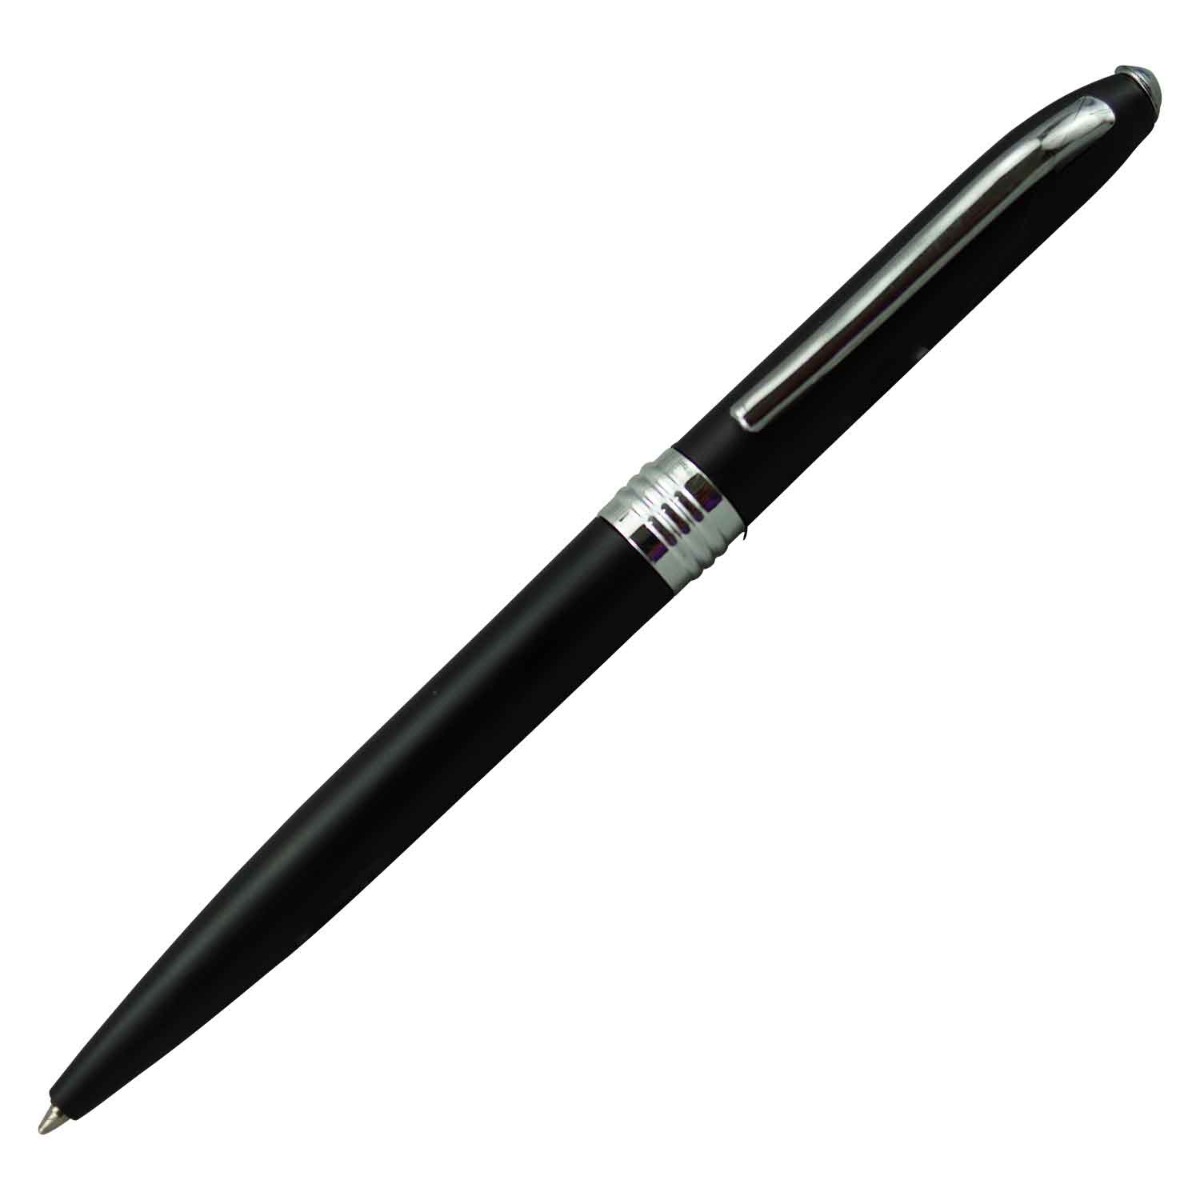 Penhouse Model:16053 Slim  Black Color Body With Silver Clip   Twist Type Fine Tip  Ball Pen